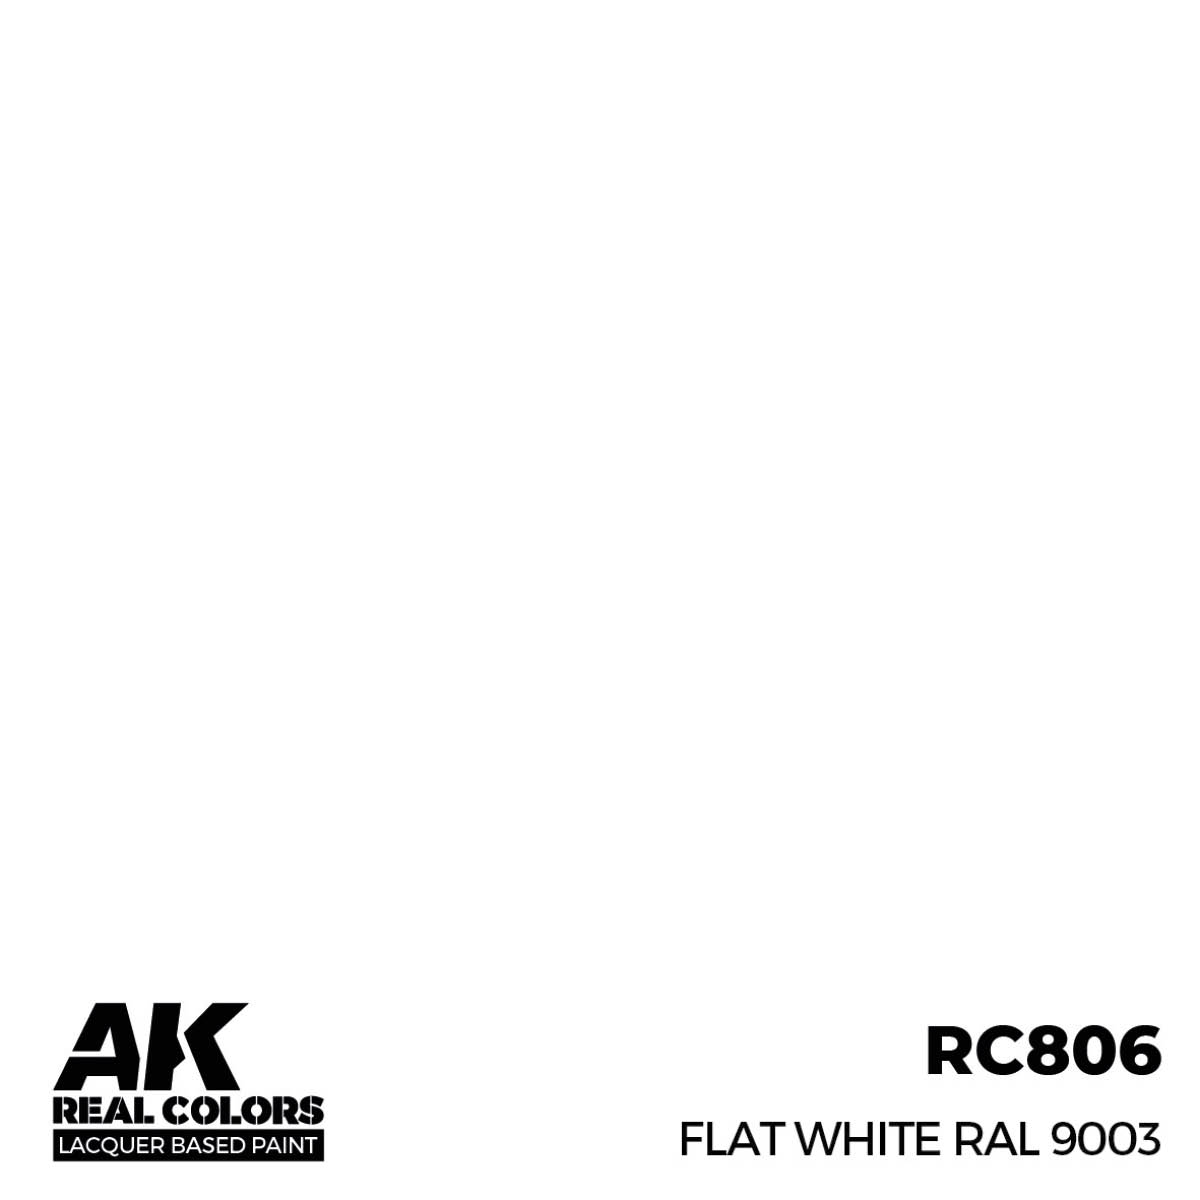 Flat White RAL 9003